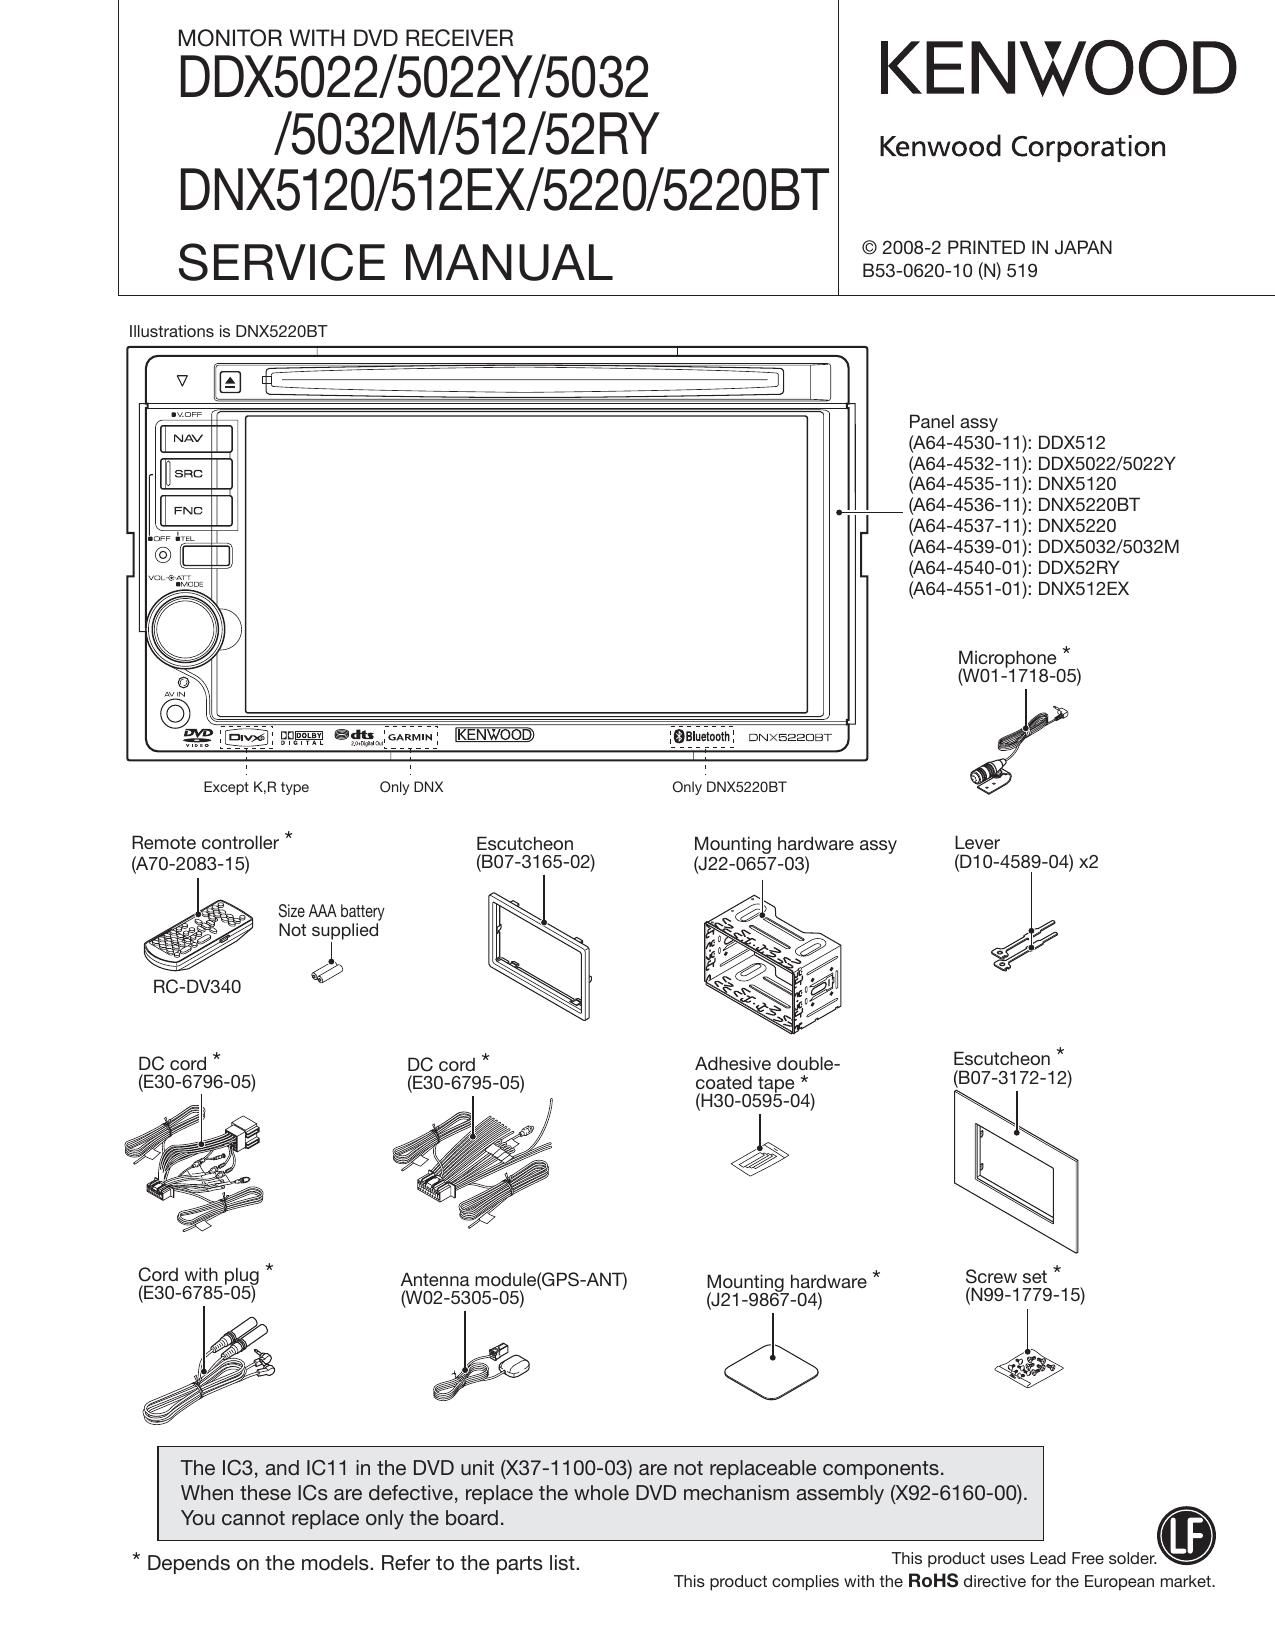 Kenwood DNX 5220 BT Service Manual